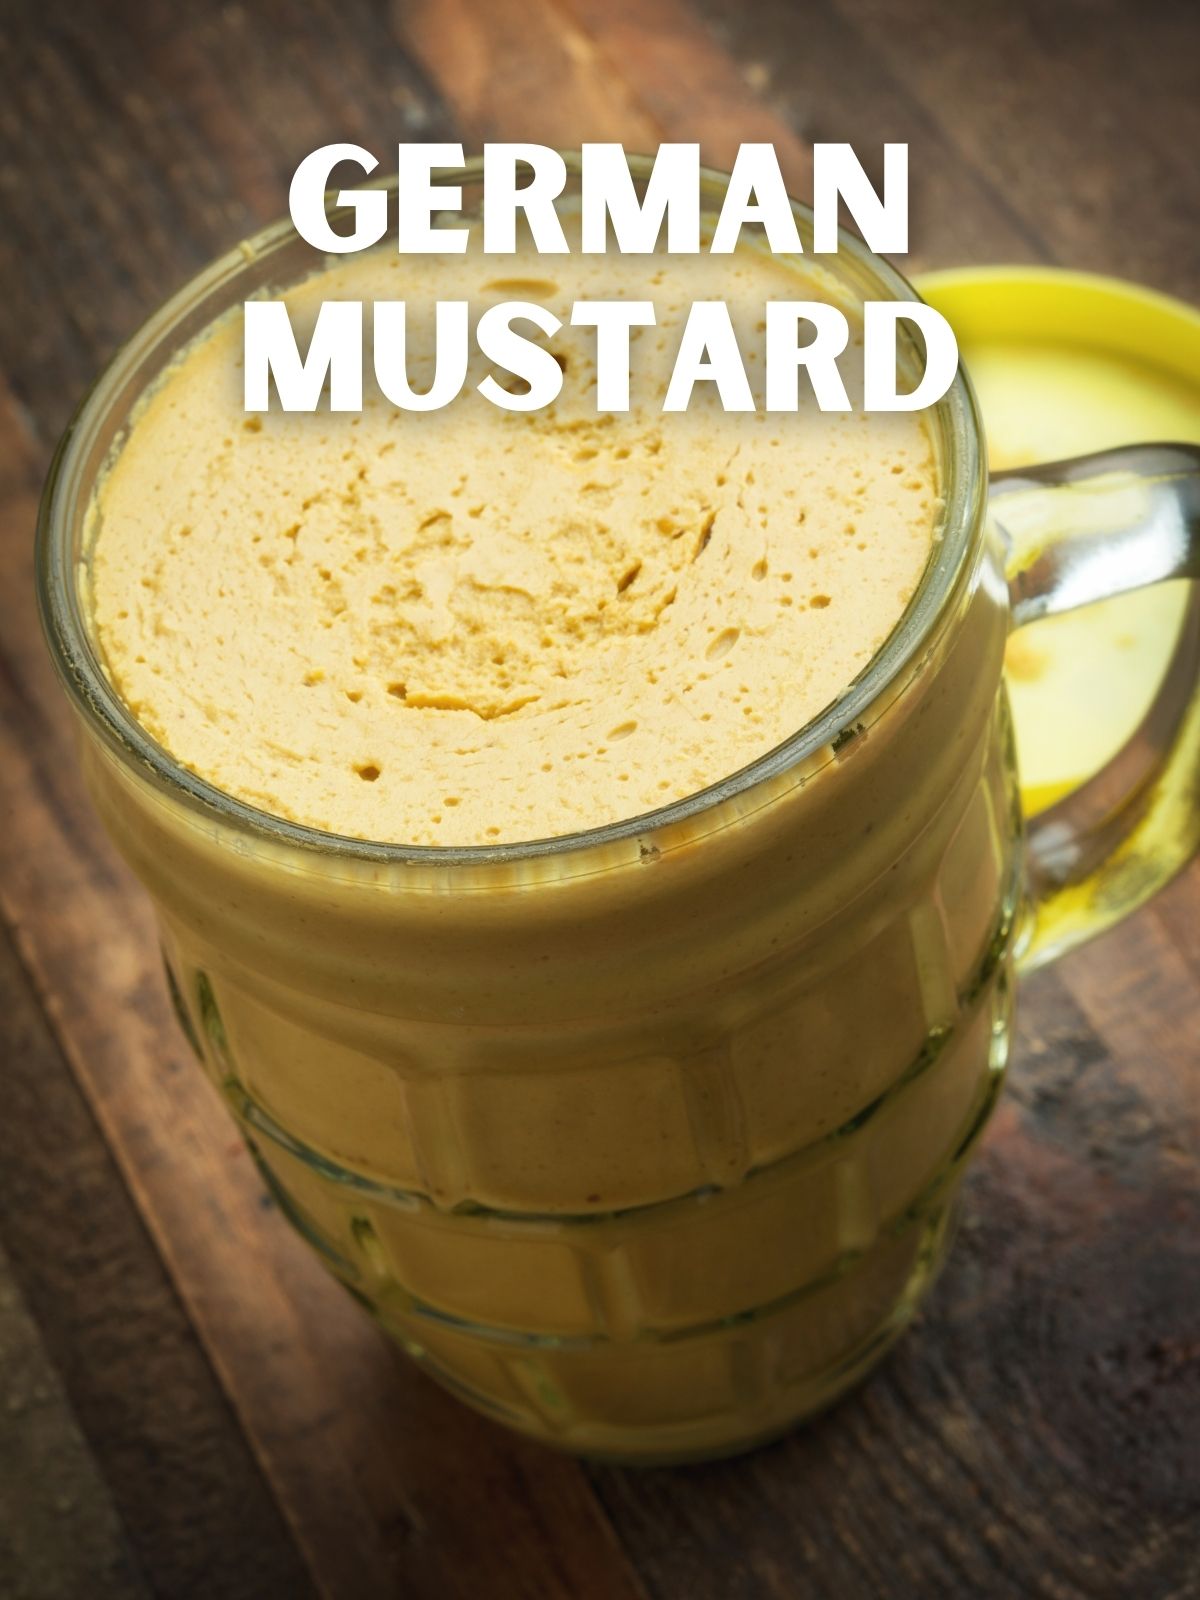 glass beer mug with German mustard